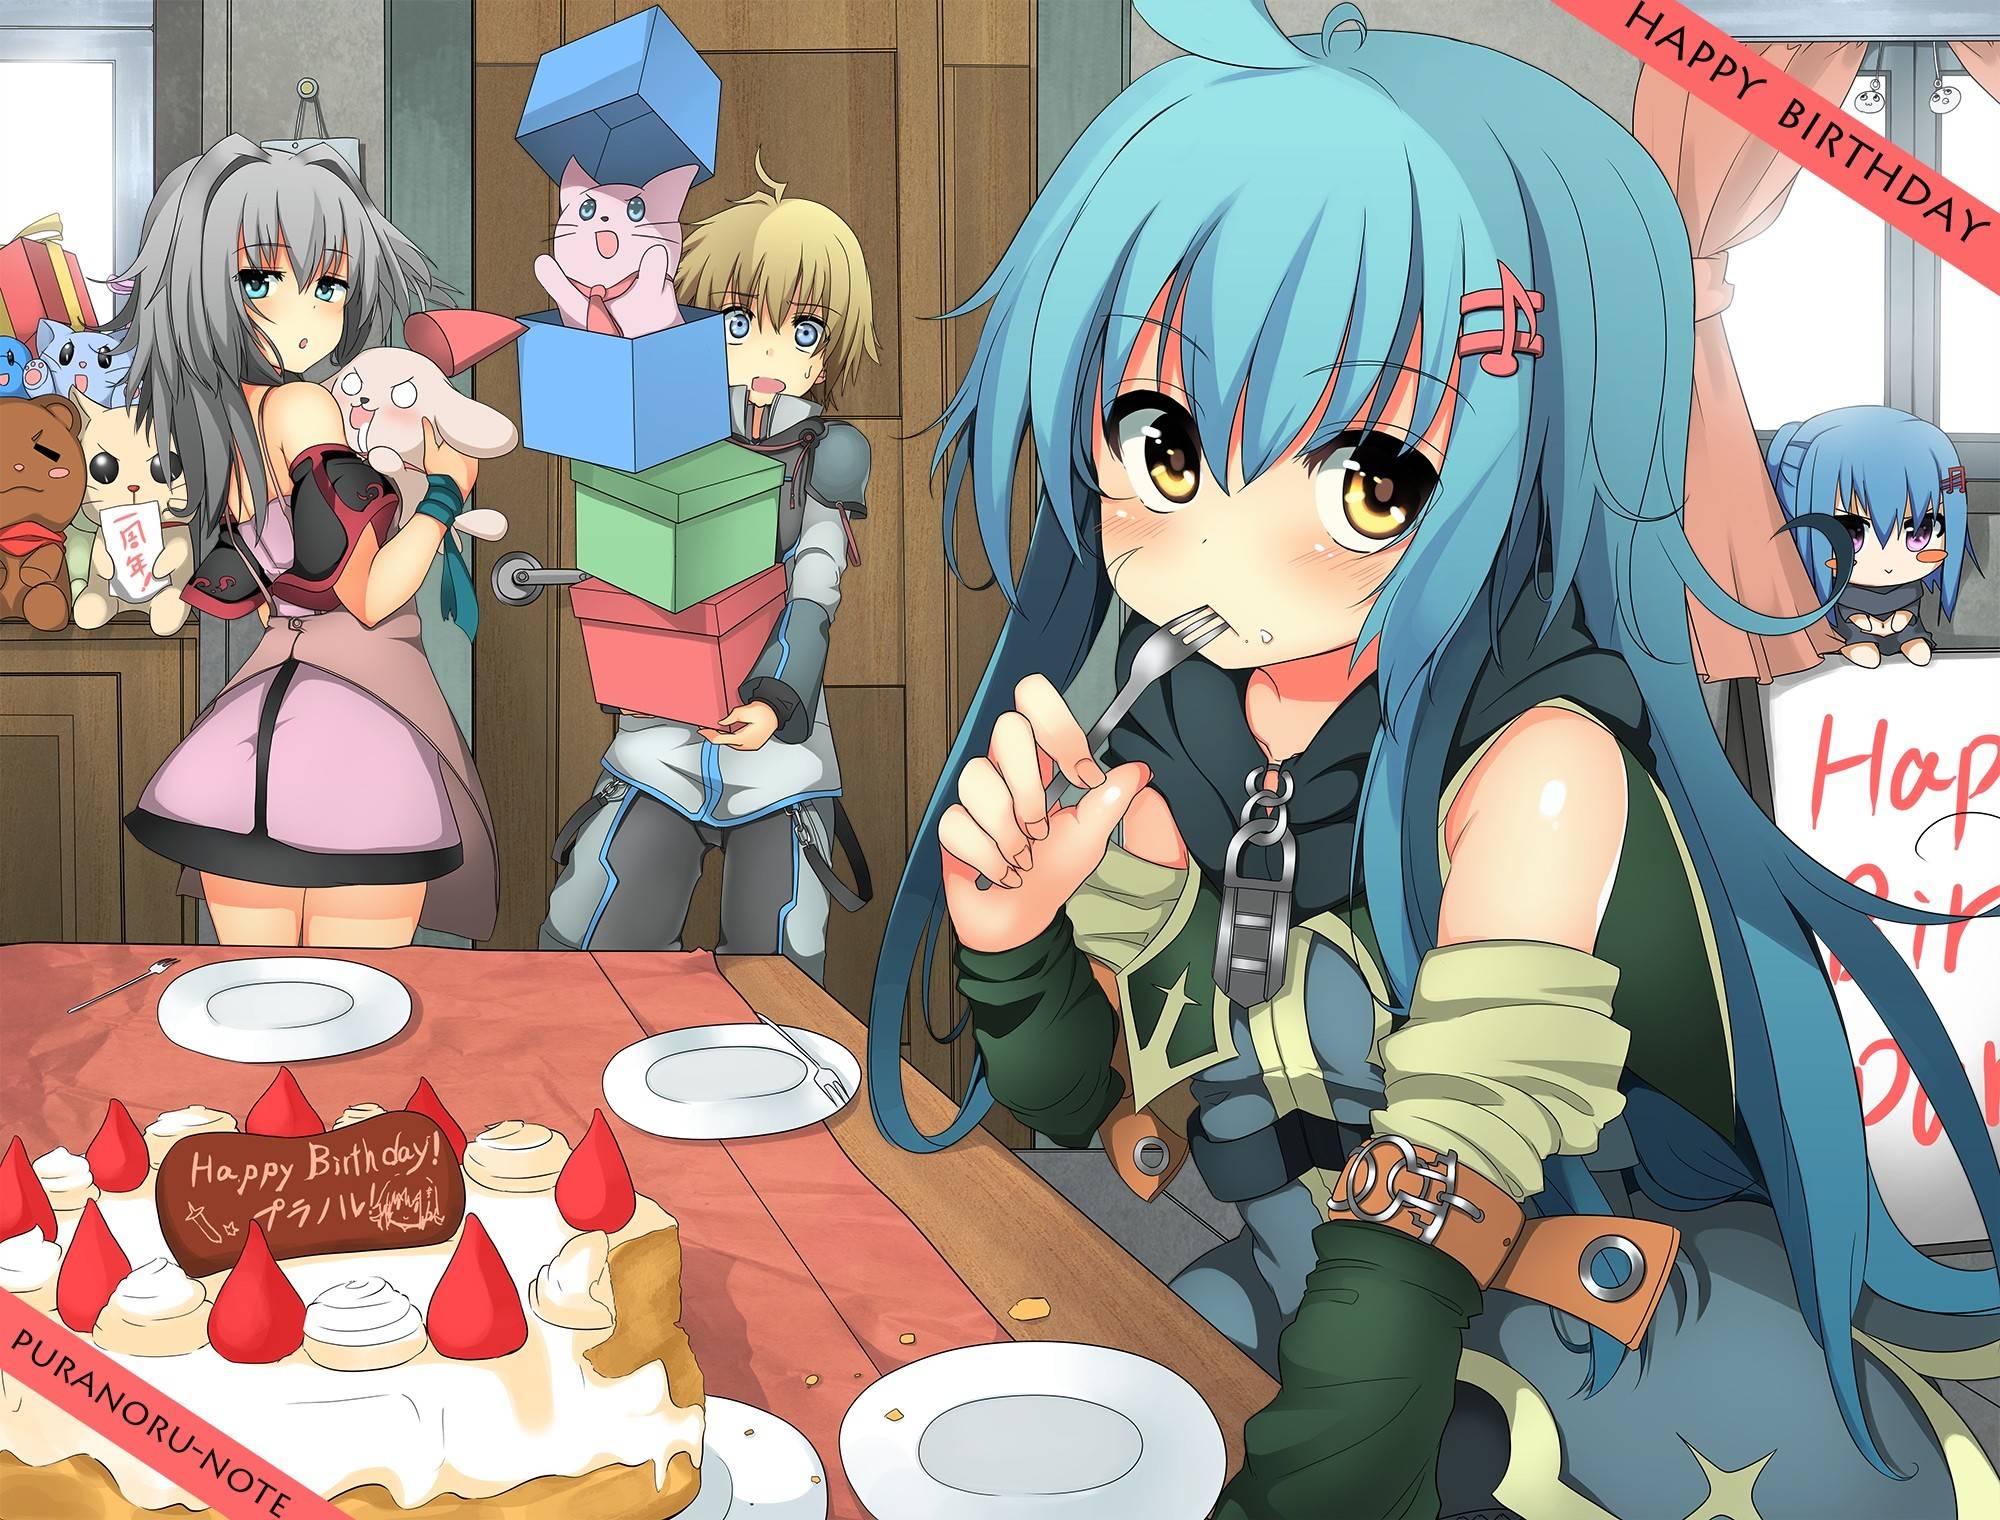 Kawaii School Girl Anime Happy Birthday GIF | GIFDB.com